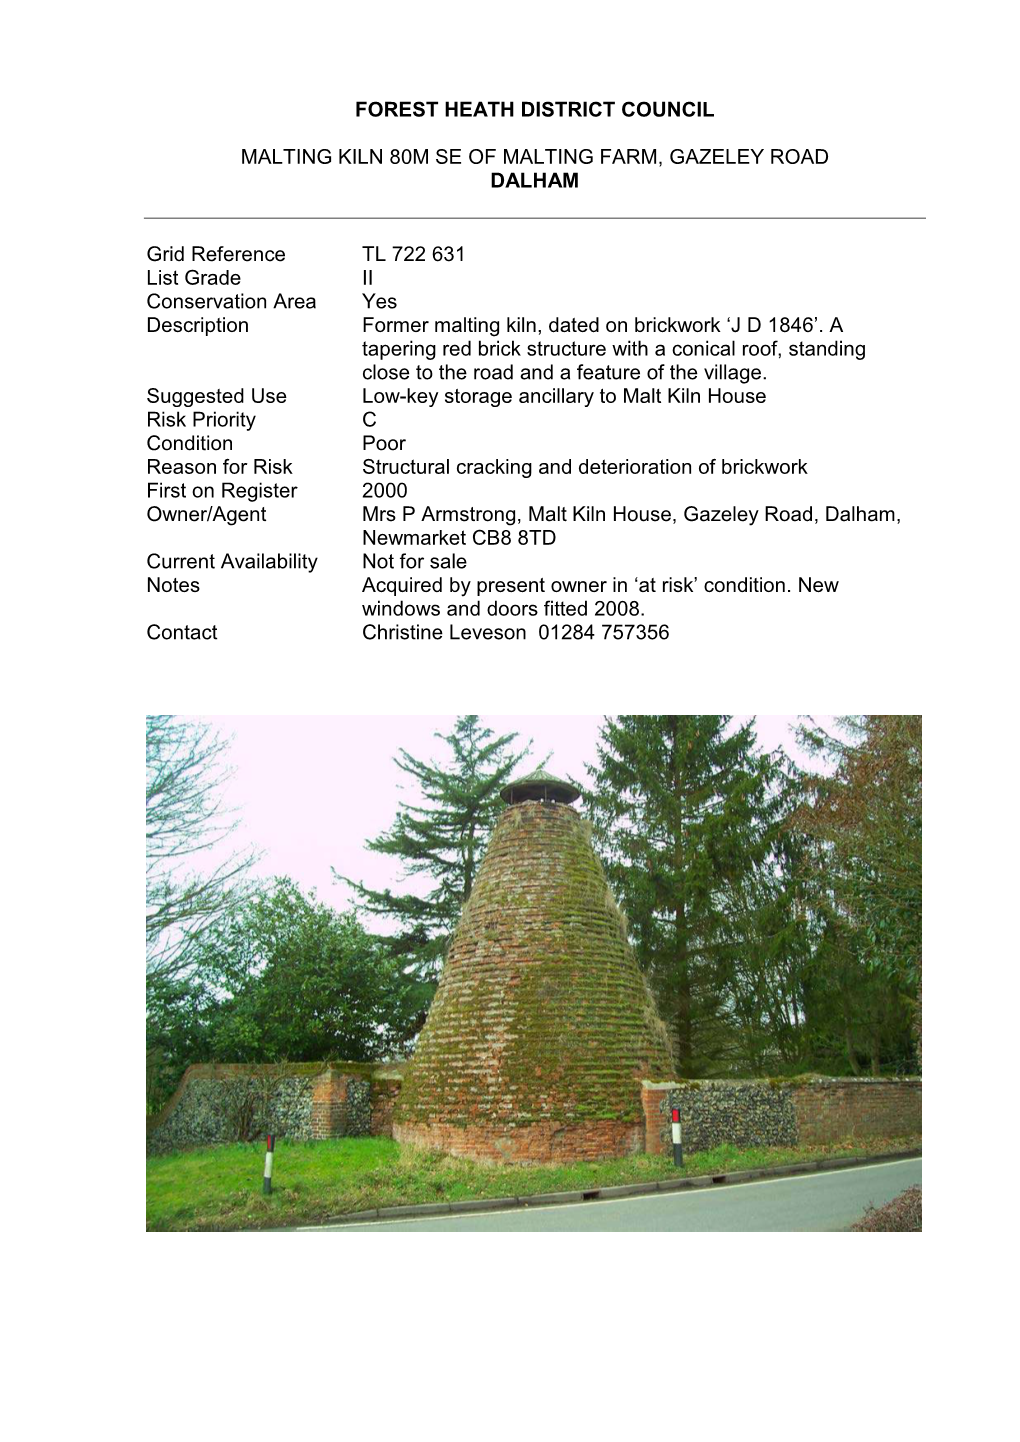 Forest Heath District Council Malting Kiln 80M Se Of